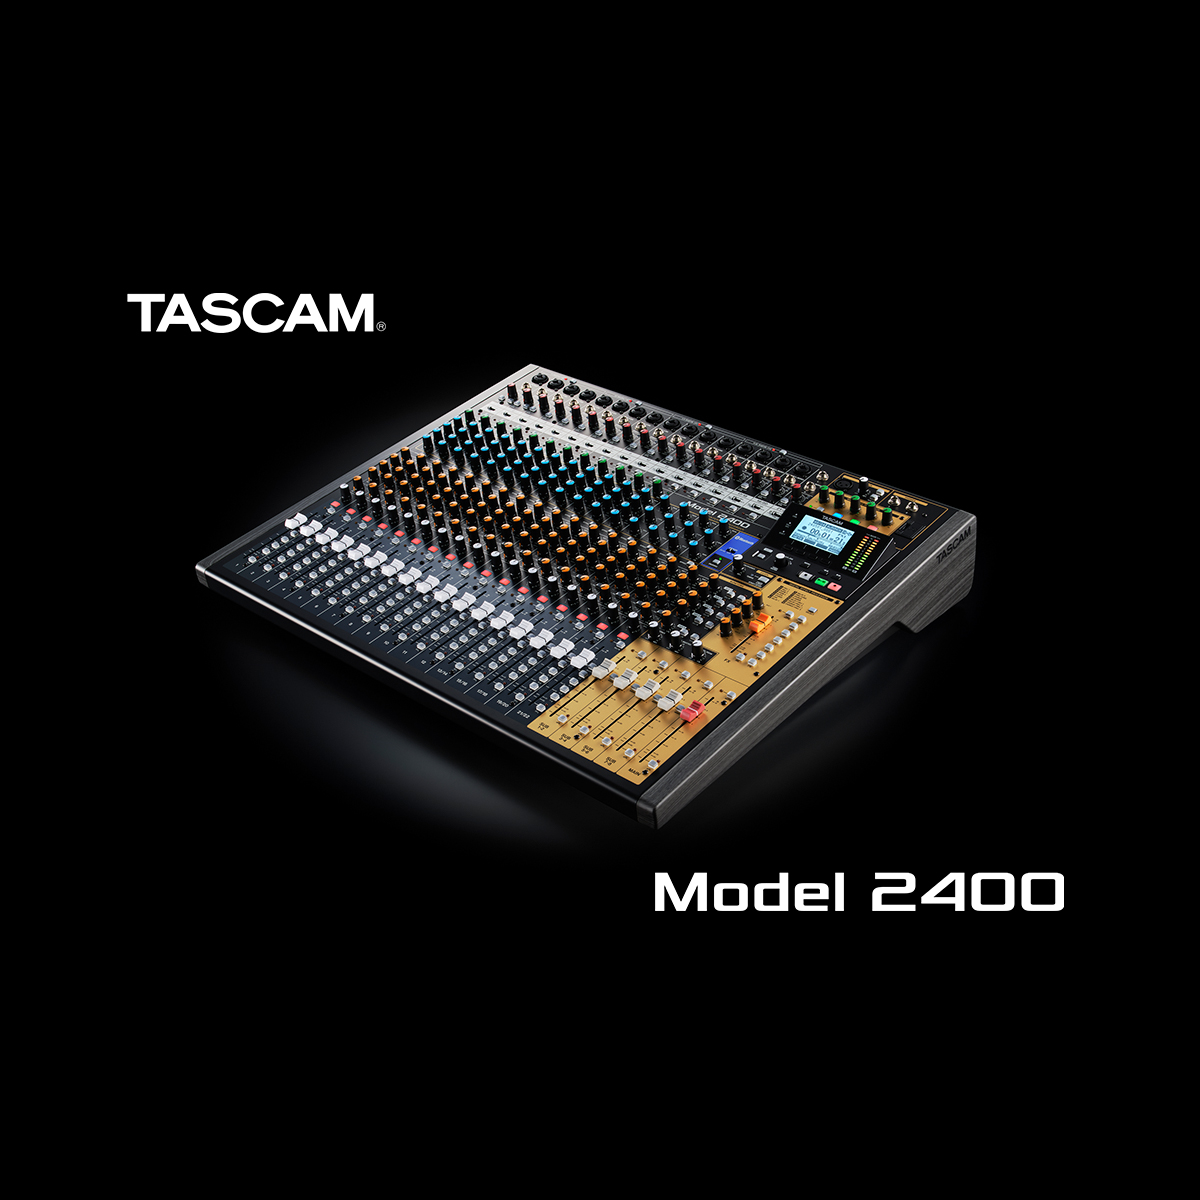 TASCAM anuncia la Model 2400